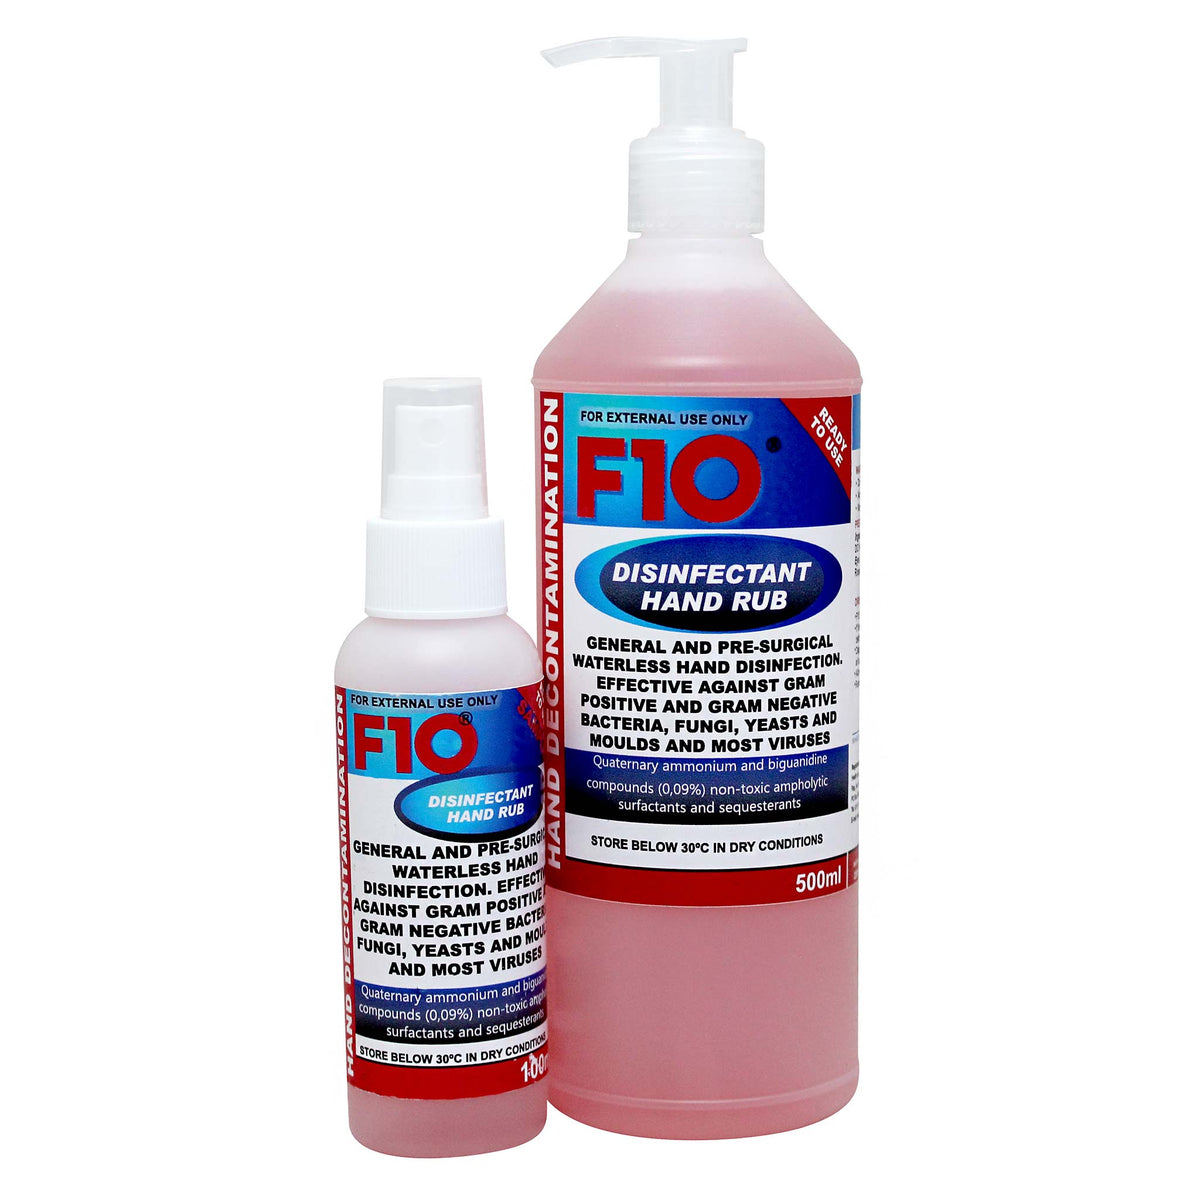 F10 Disinfectant Hand Rub Pump Pack